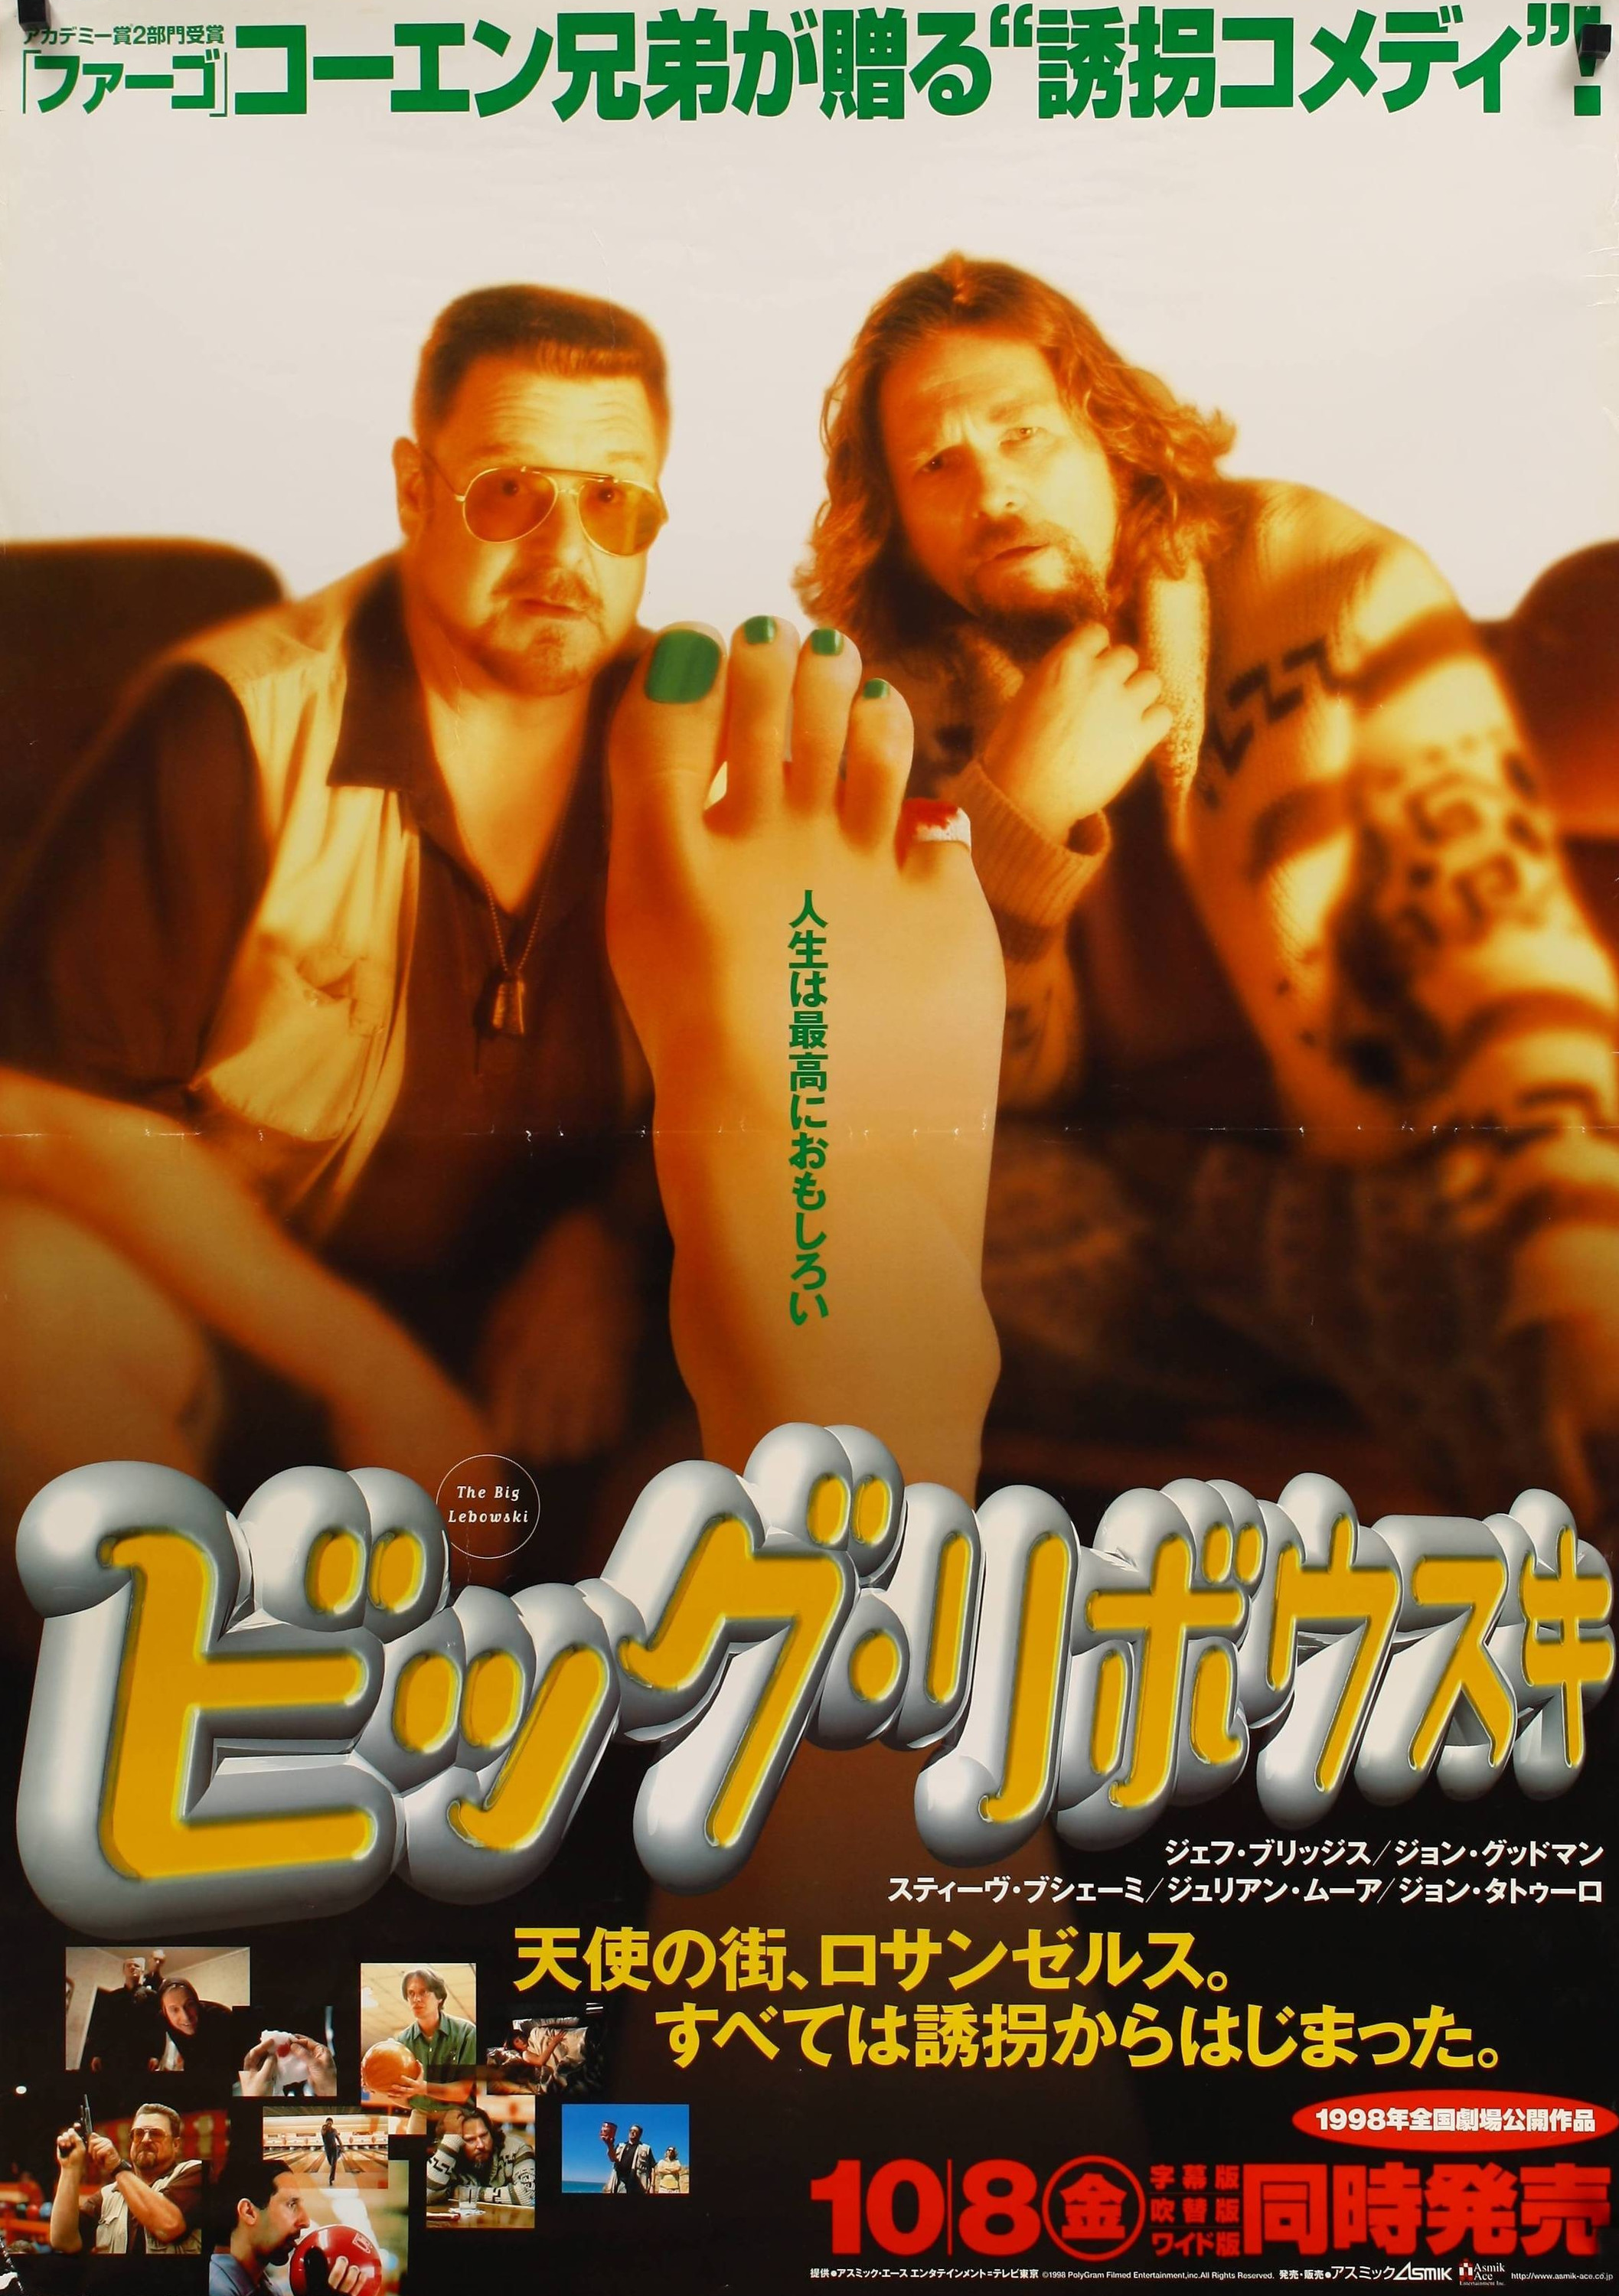 Mega Sized Movie Poster Image for The Big Lebowski (#5 of 5)